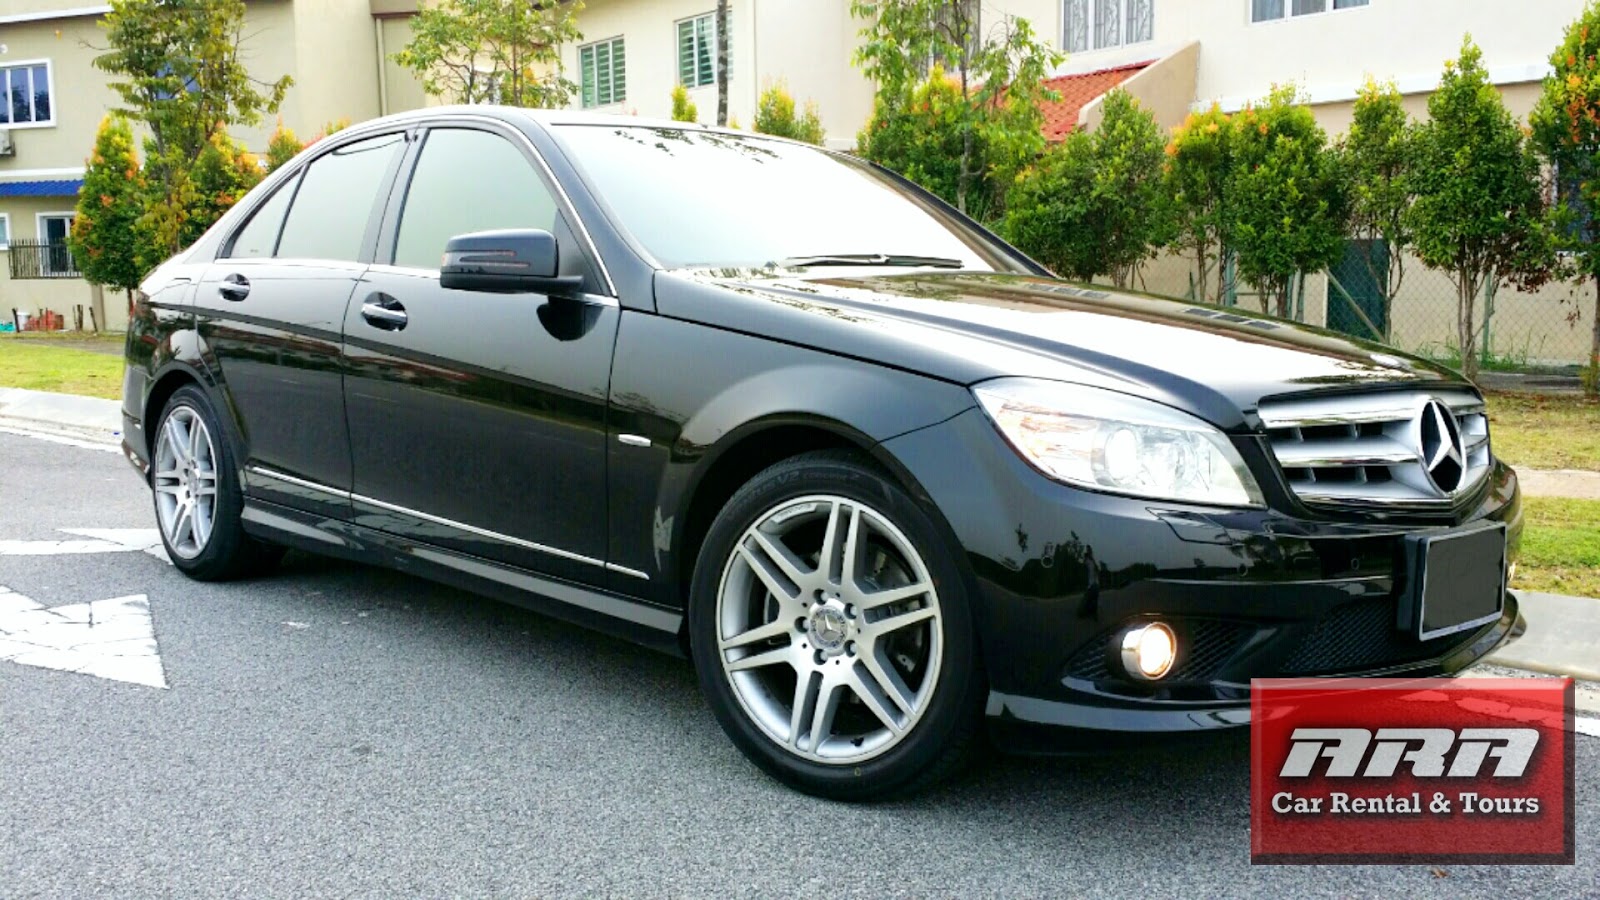 ARA Car Rental Kuala Lumpur, Penang & Johor Bahru: LUX - Mercedes C200 ...